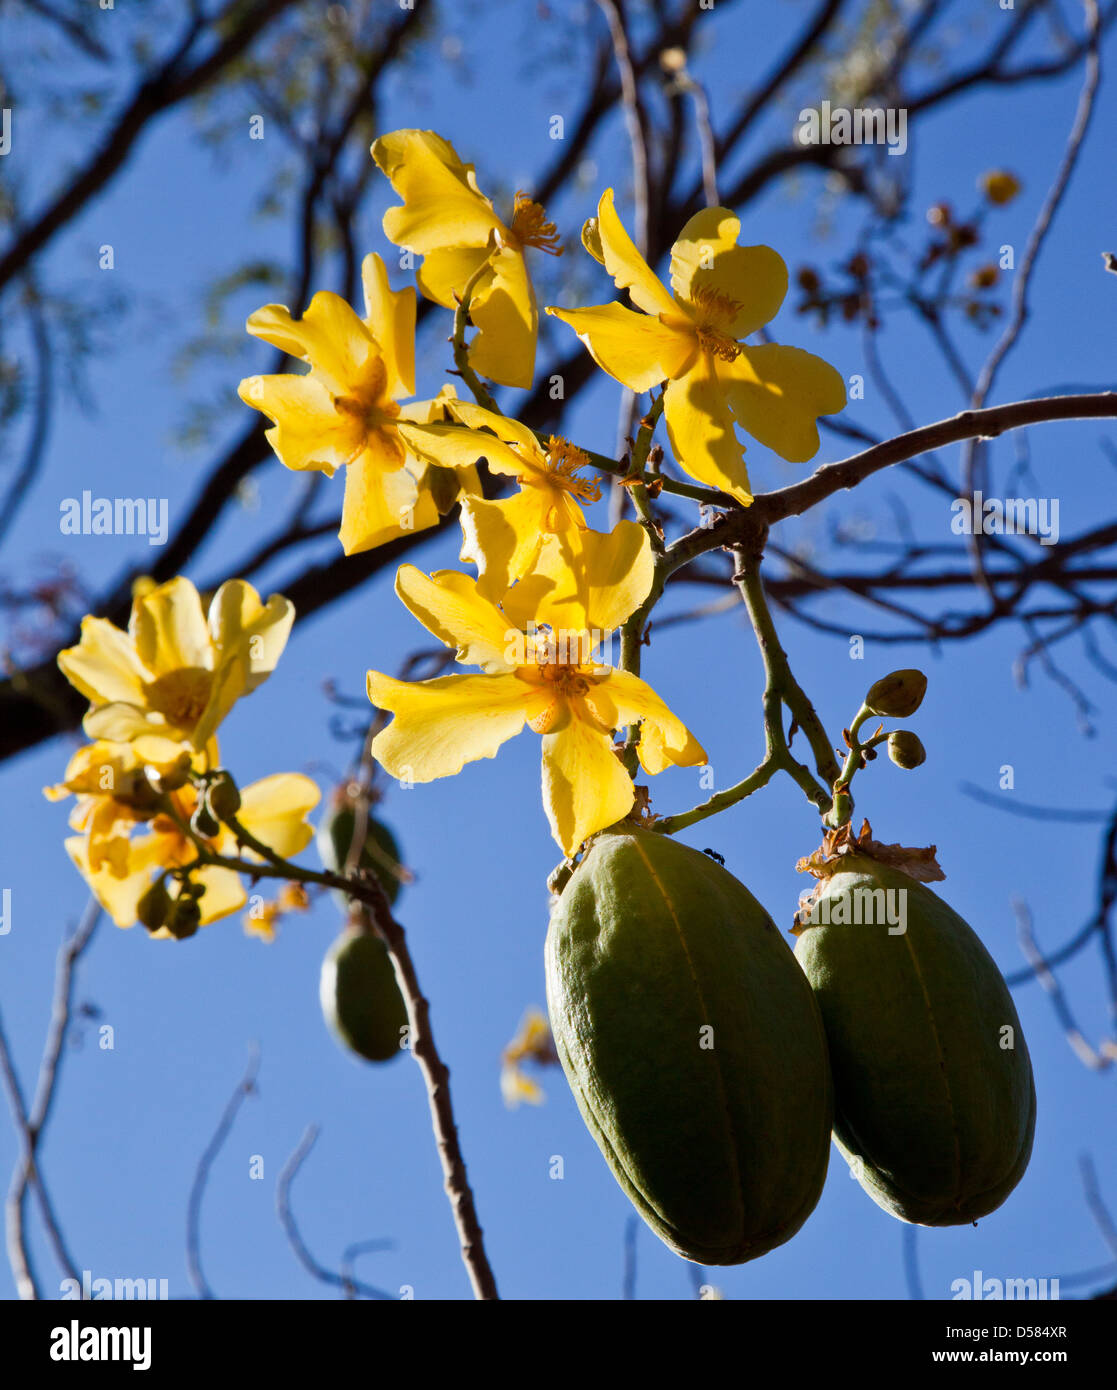 Australia, Western Australia, Kununurra, flowering Kapok bush with seed pods, Cochlospermum fraseri, also known as Yellow Kapok Stock Photo